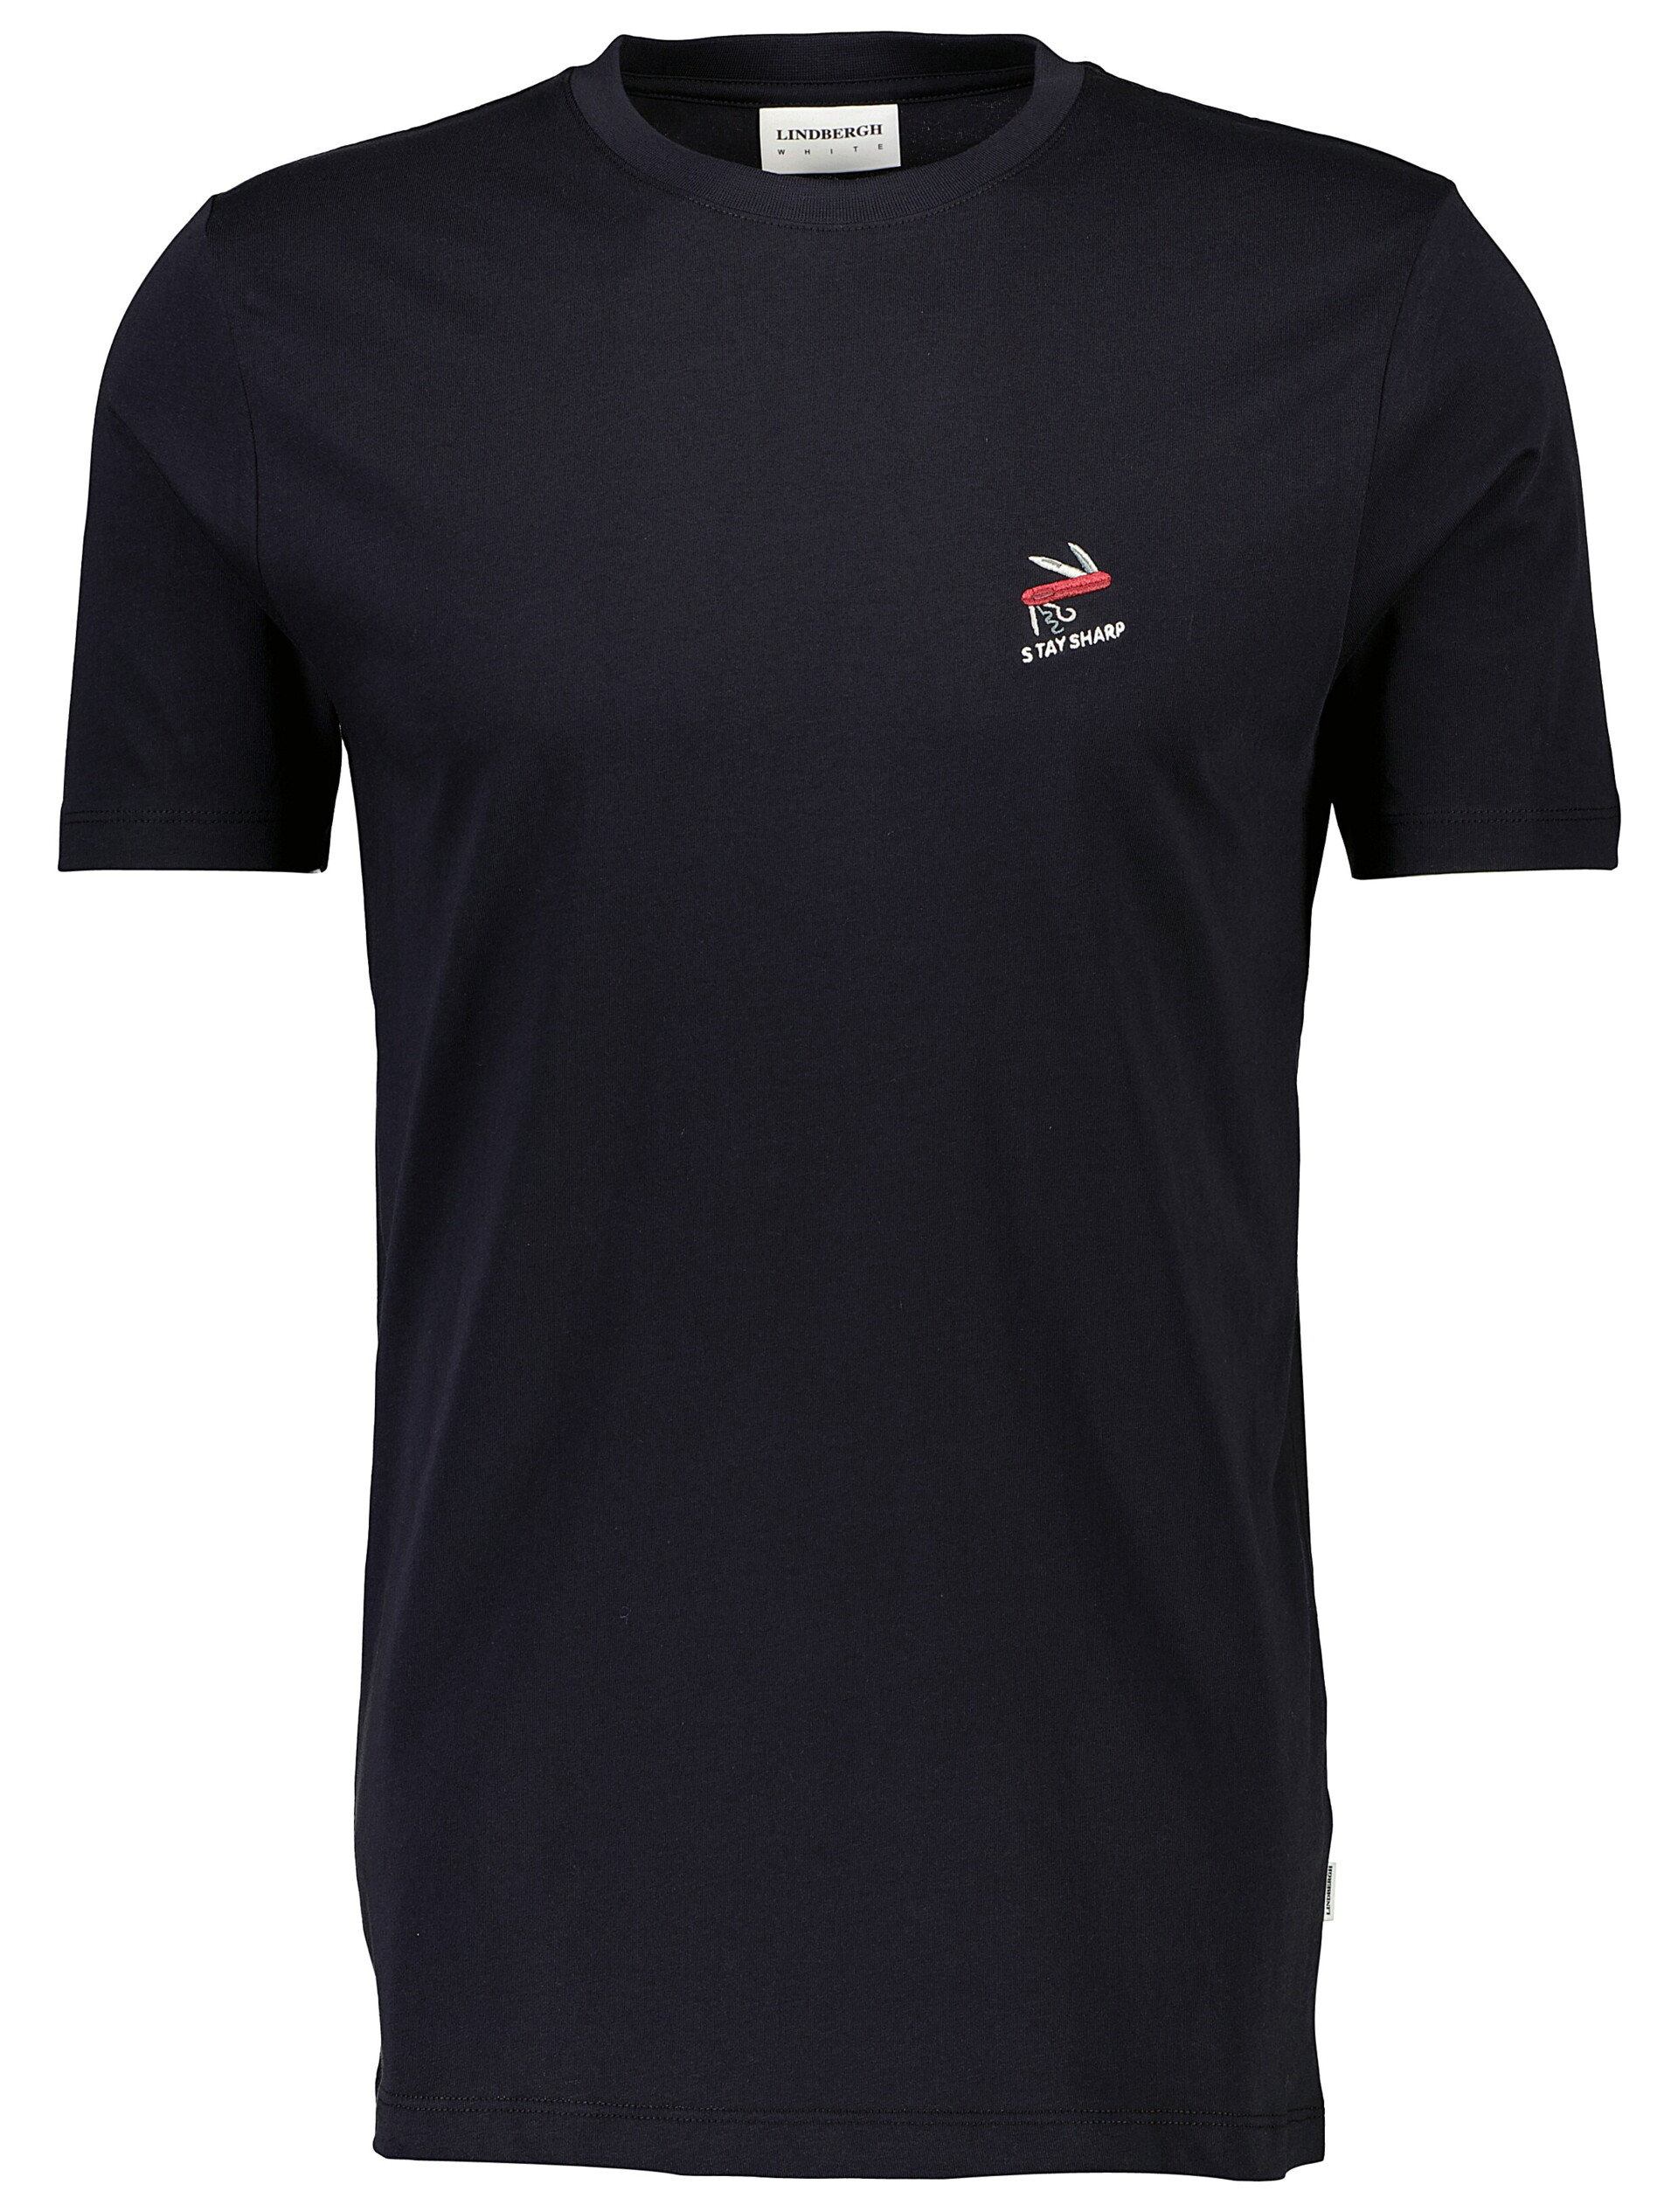 Lindbergh T-shirt schwarz / true black